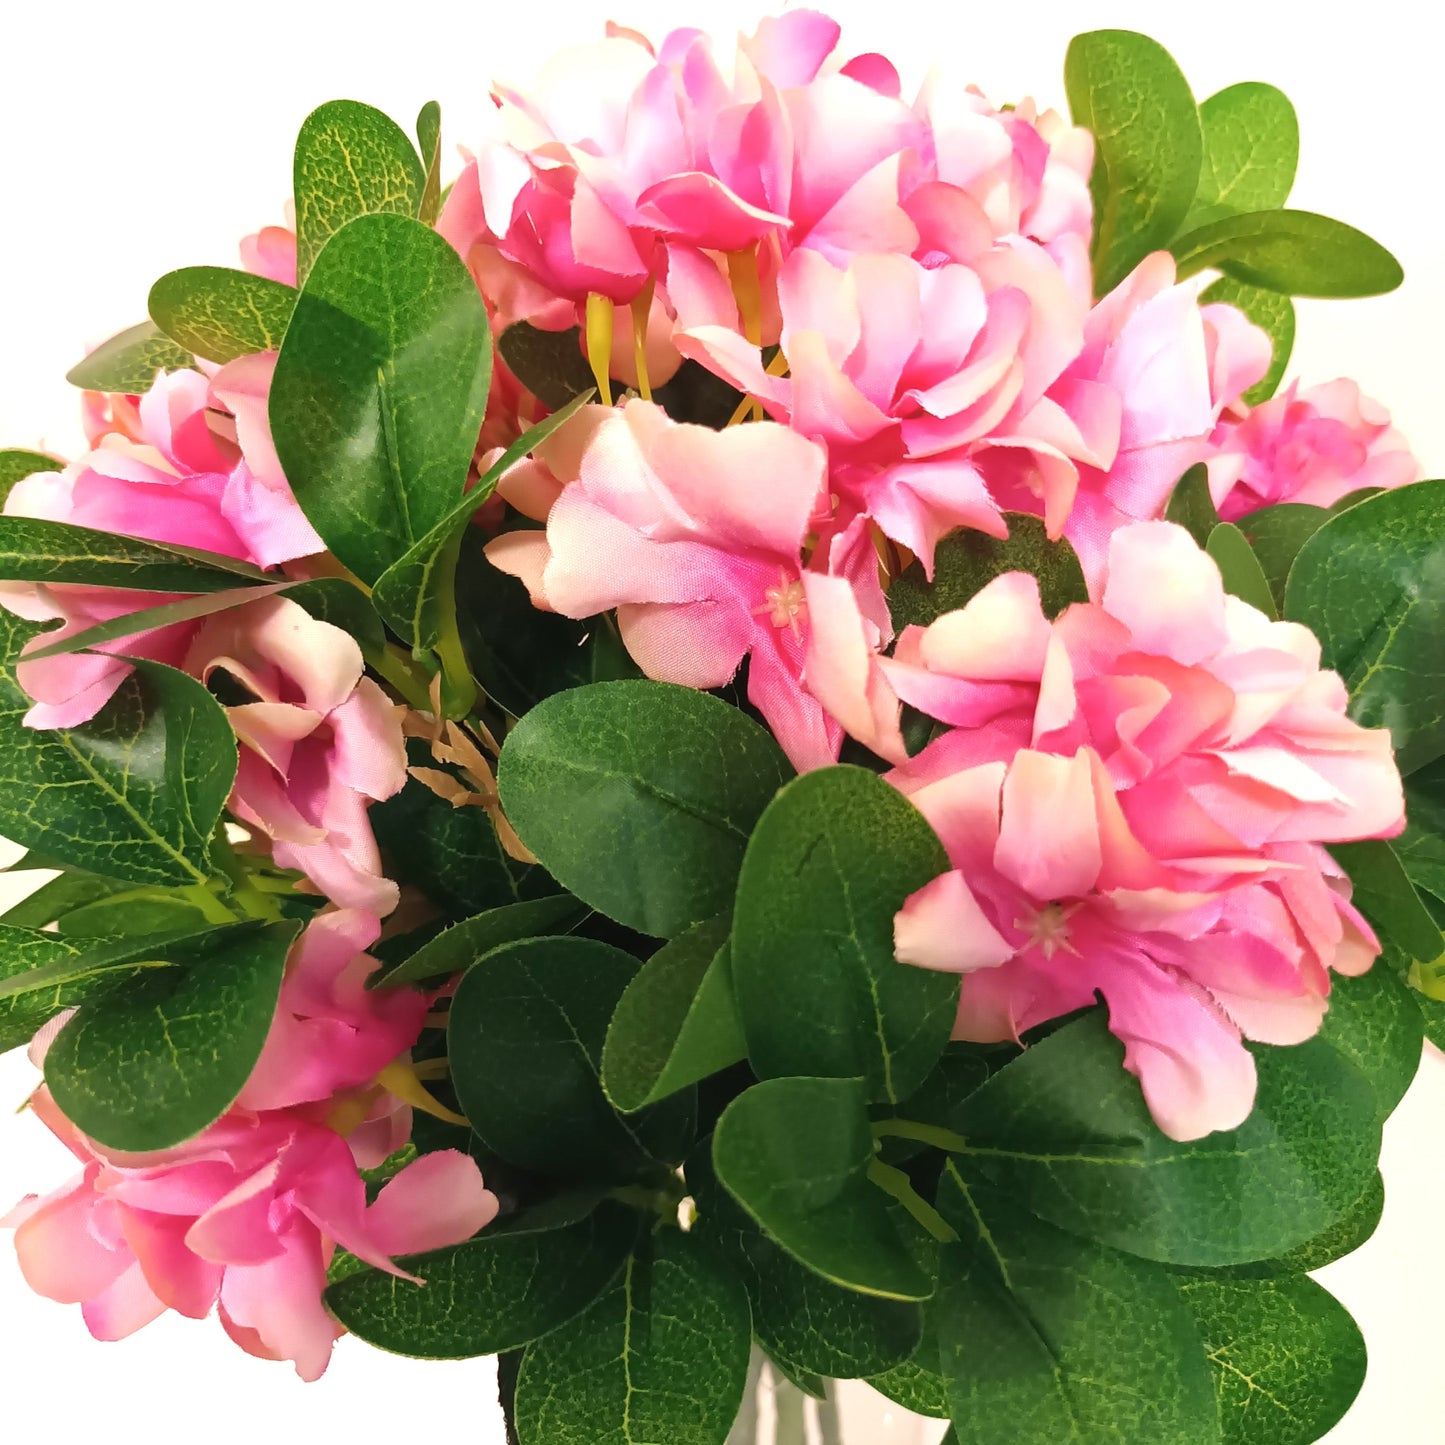 Artificial Hyacinth Flowers and Foliage Filler Arrangement